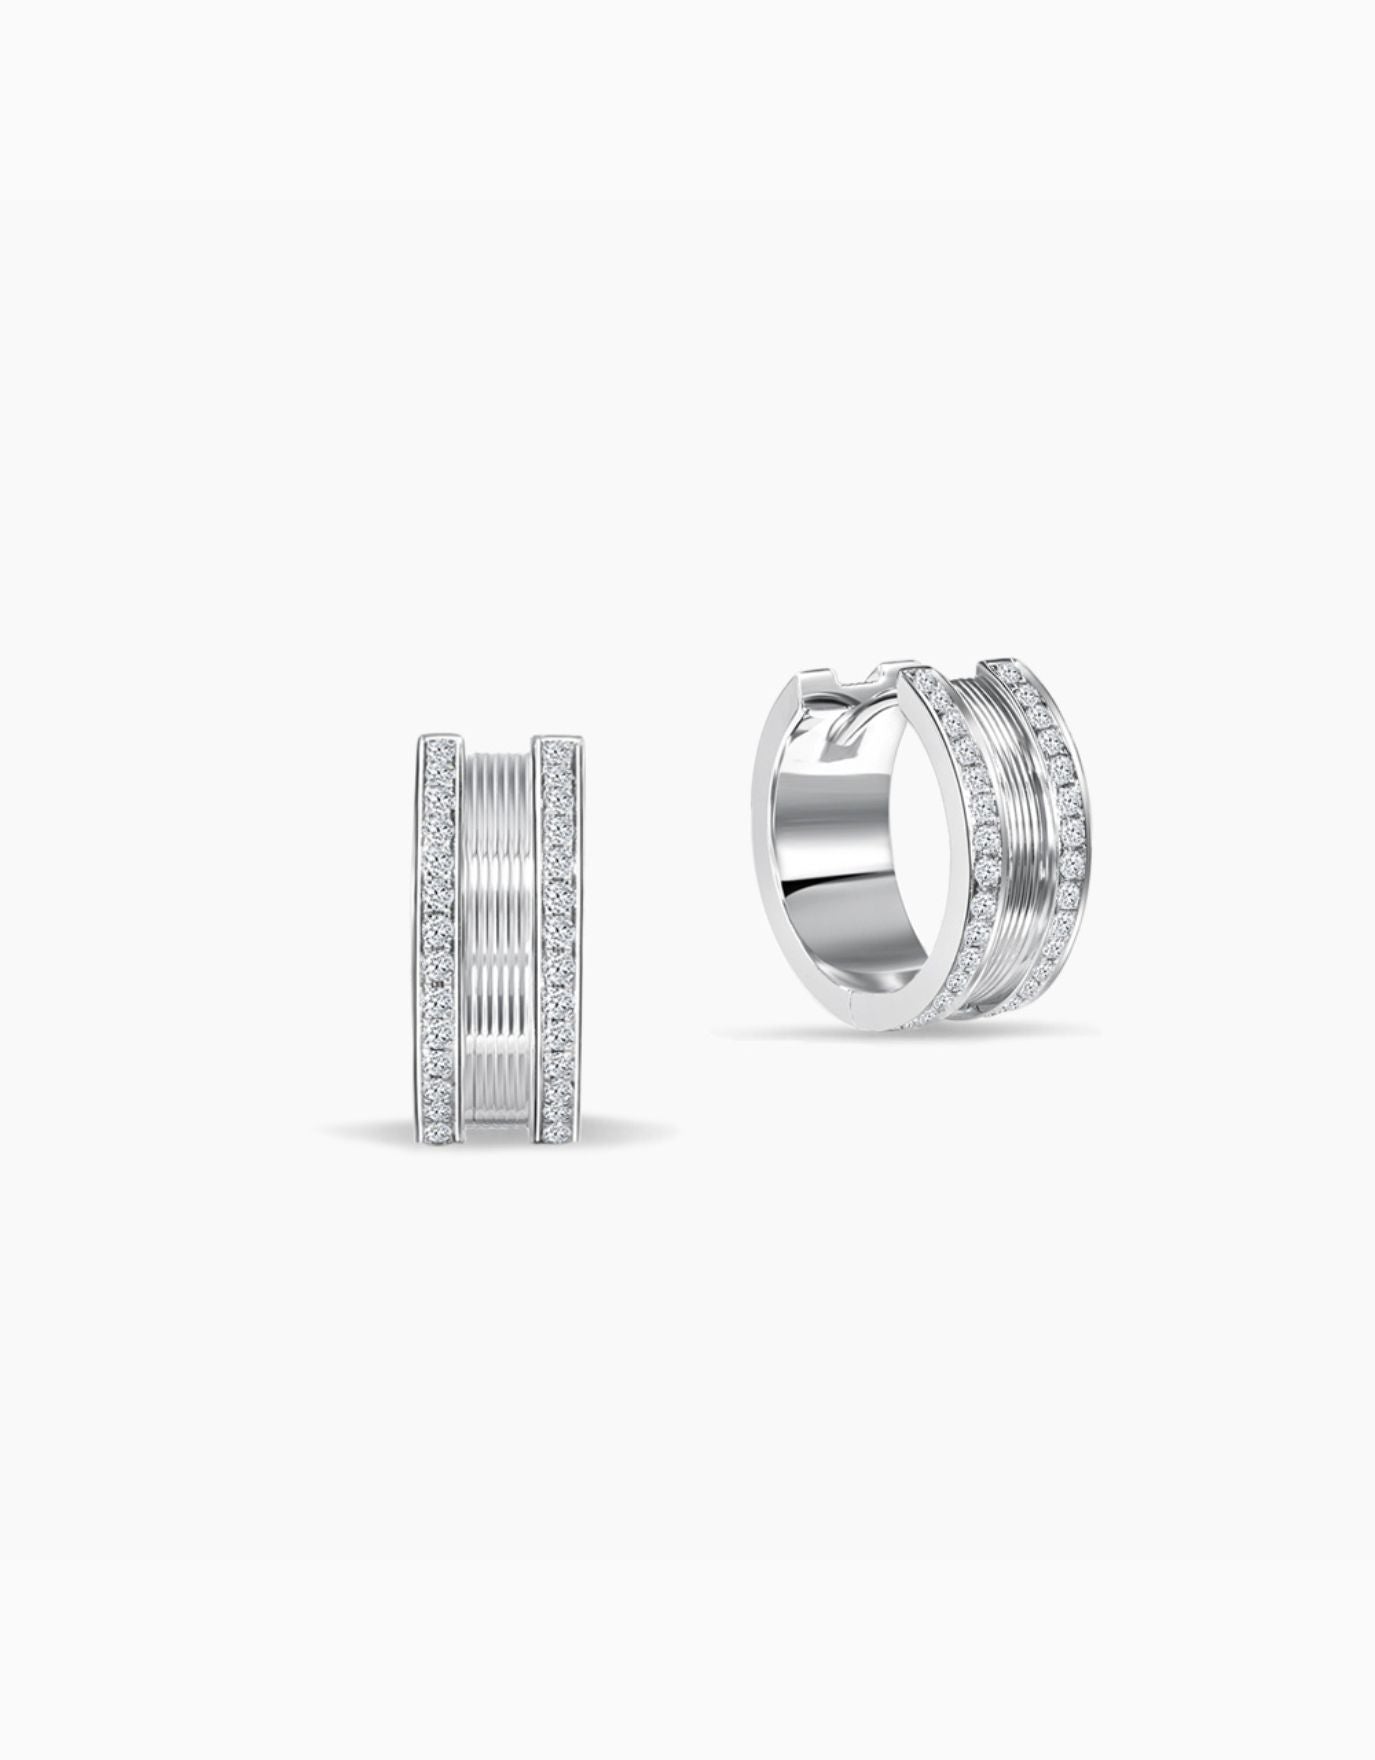 LVC Promise Eternity Diamond Earrings